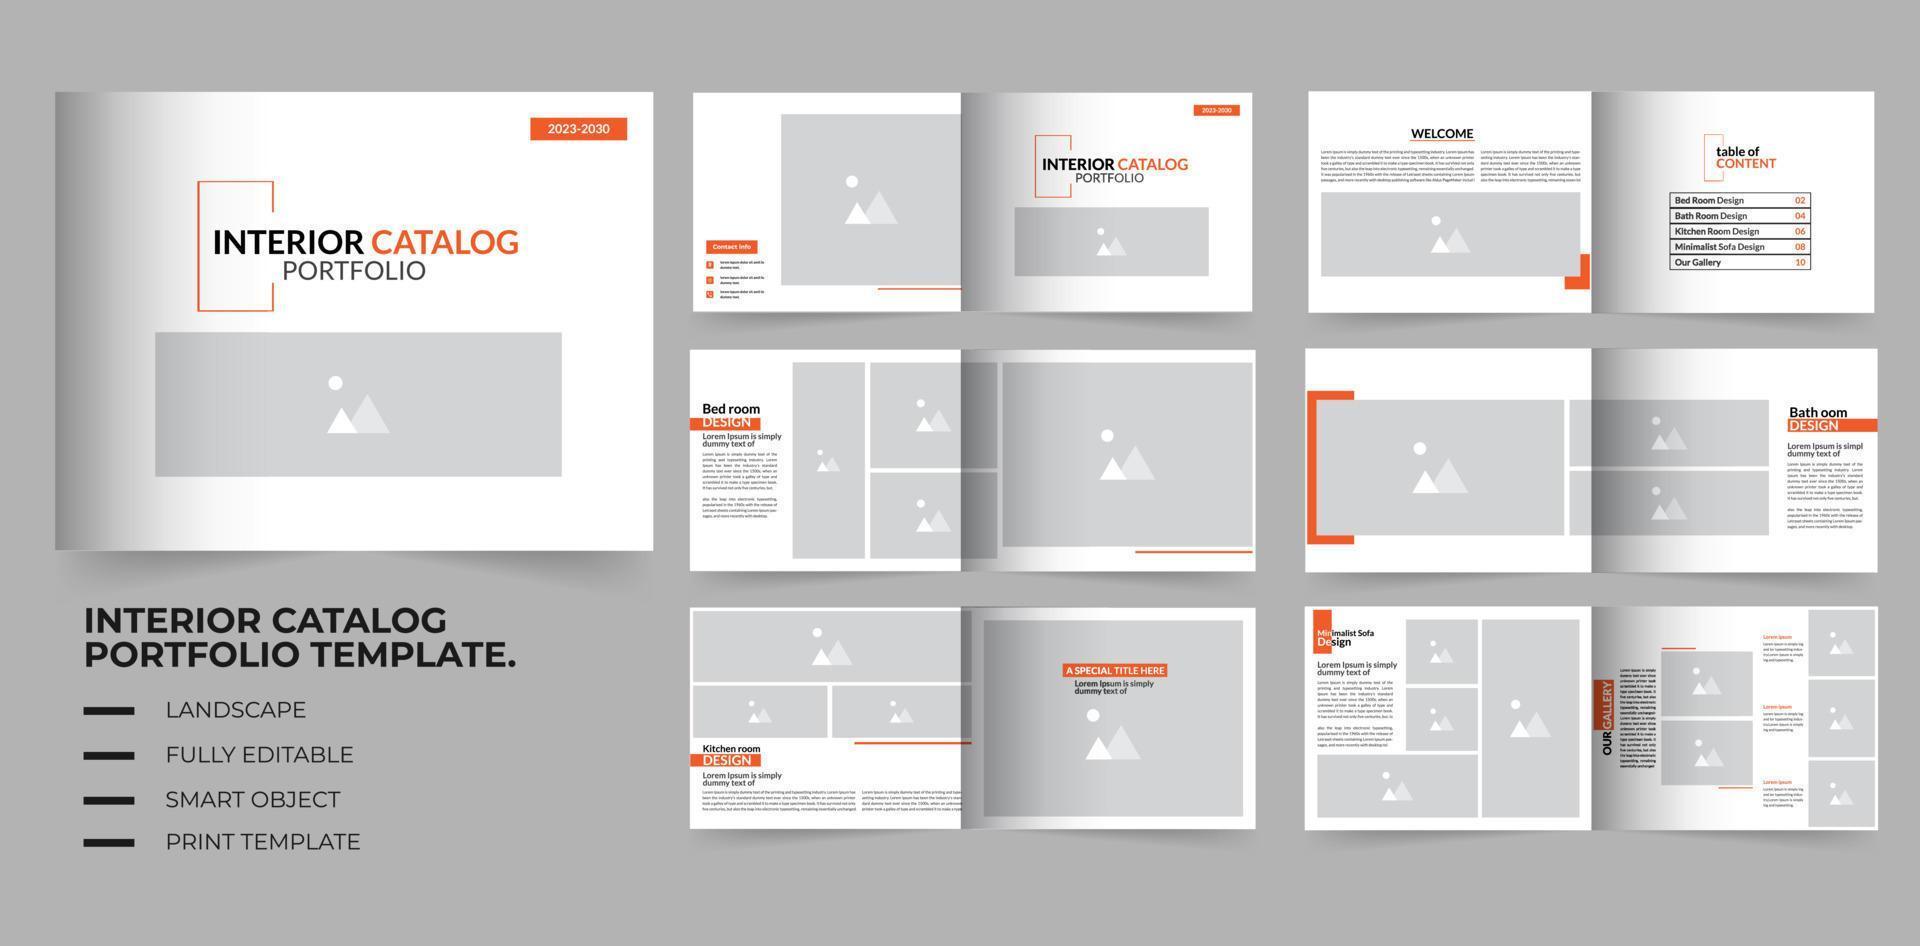 Interior Catalog Portfolio design template vector